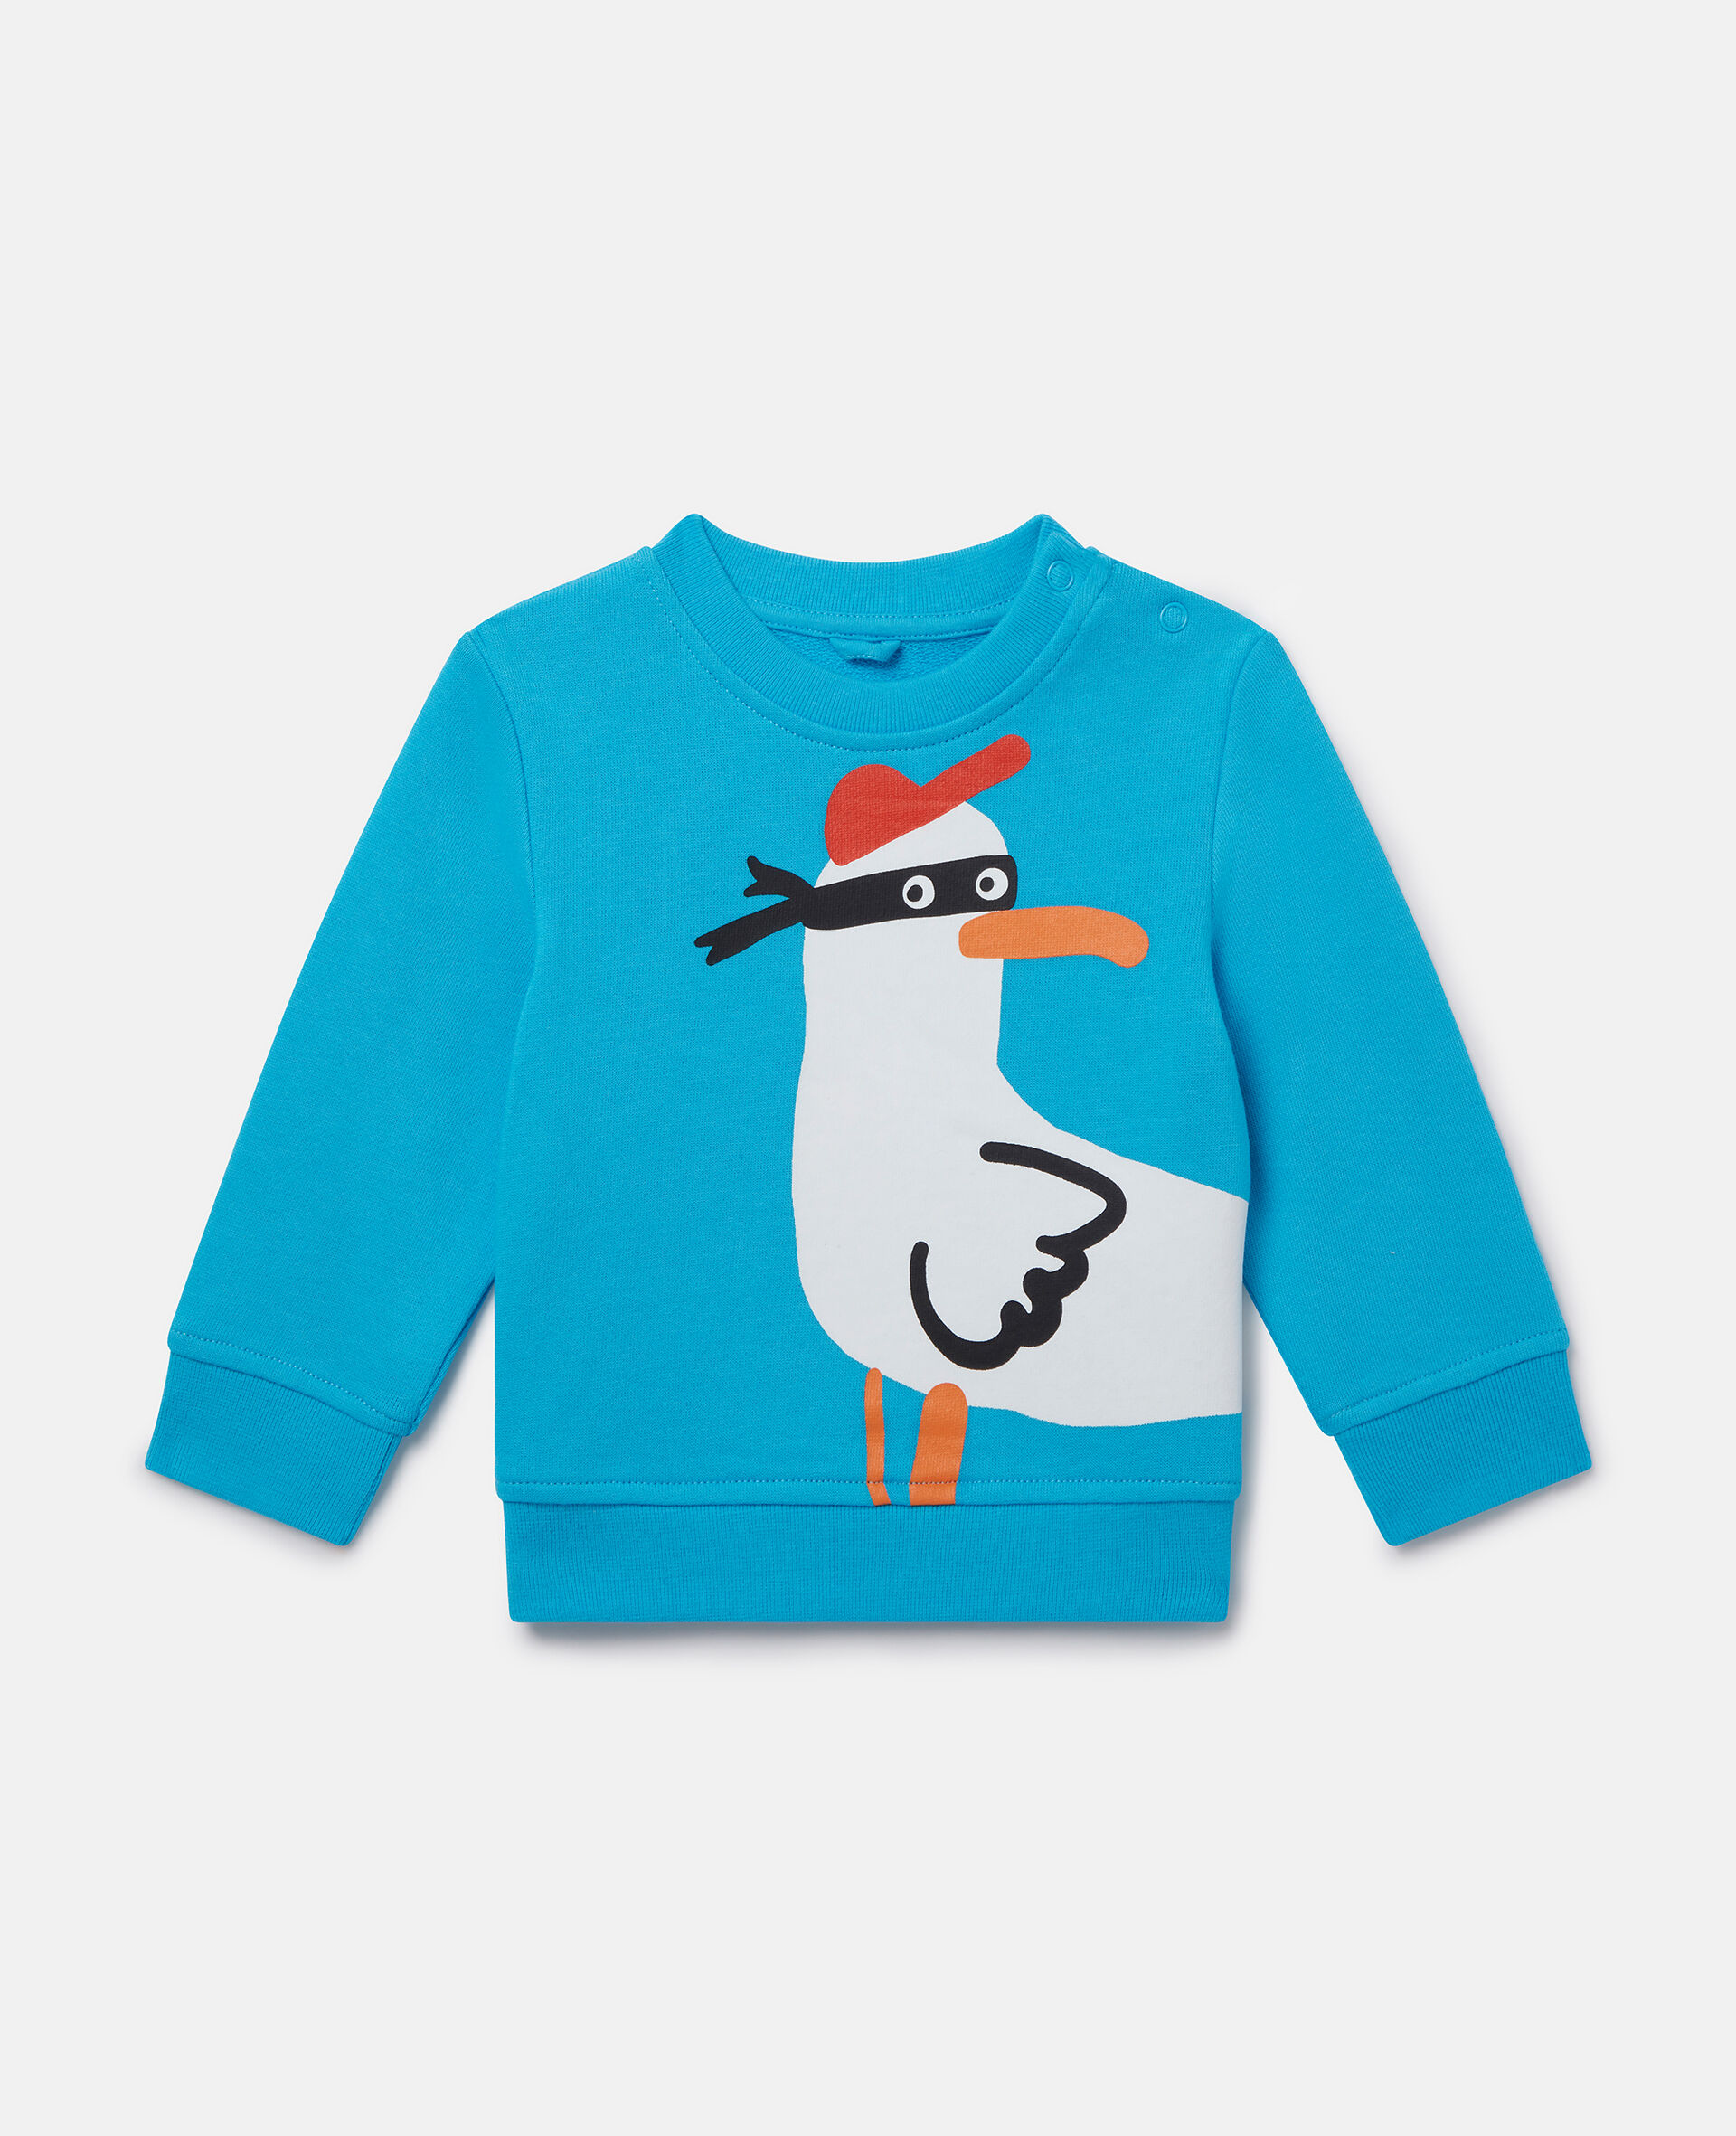 Seagull Bandit Sweatshirt-Blue-large image number 0